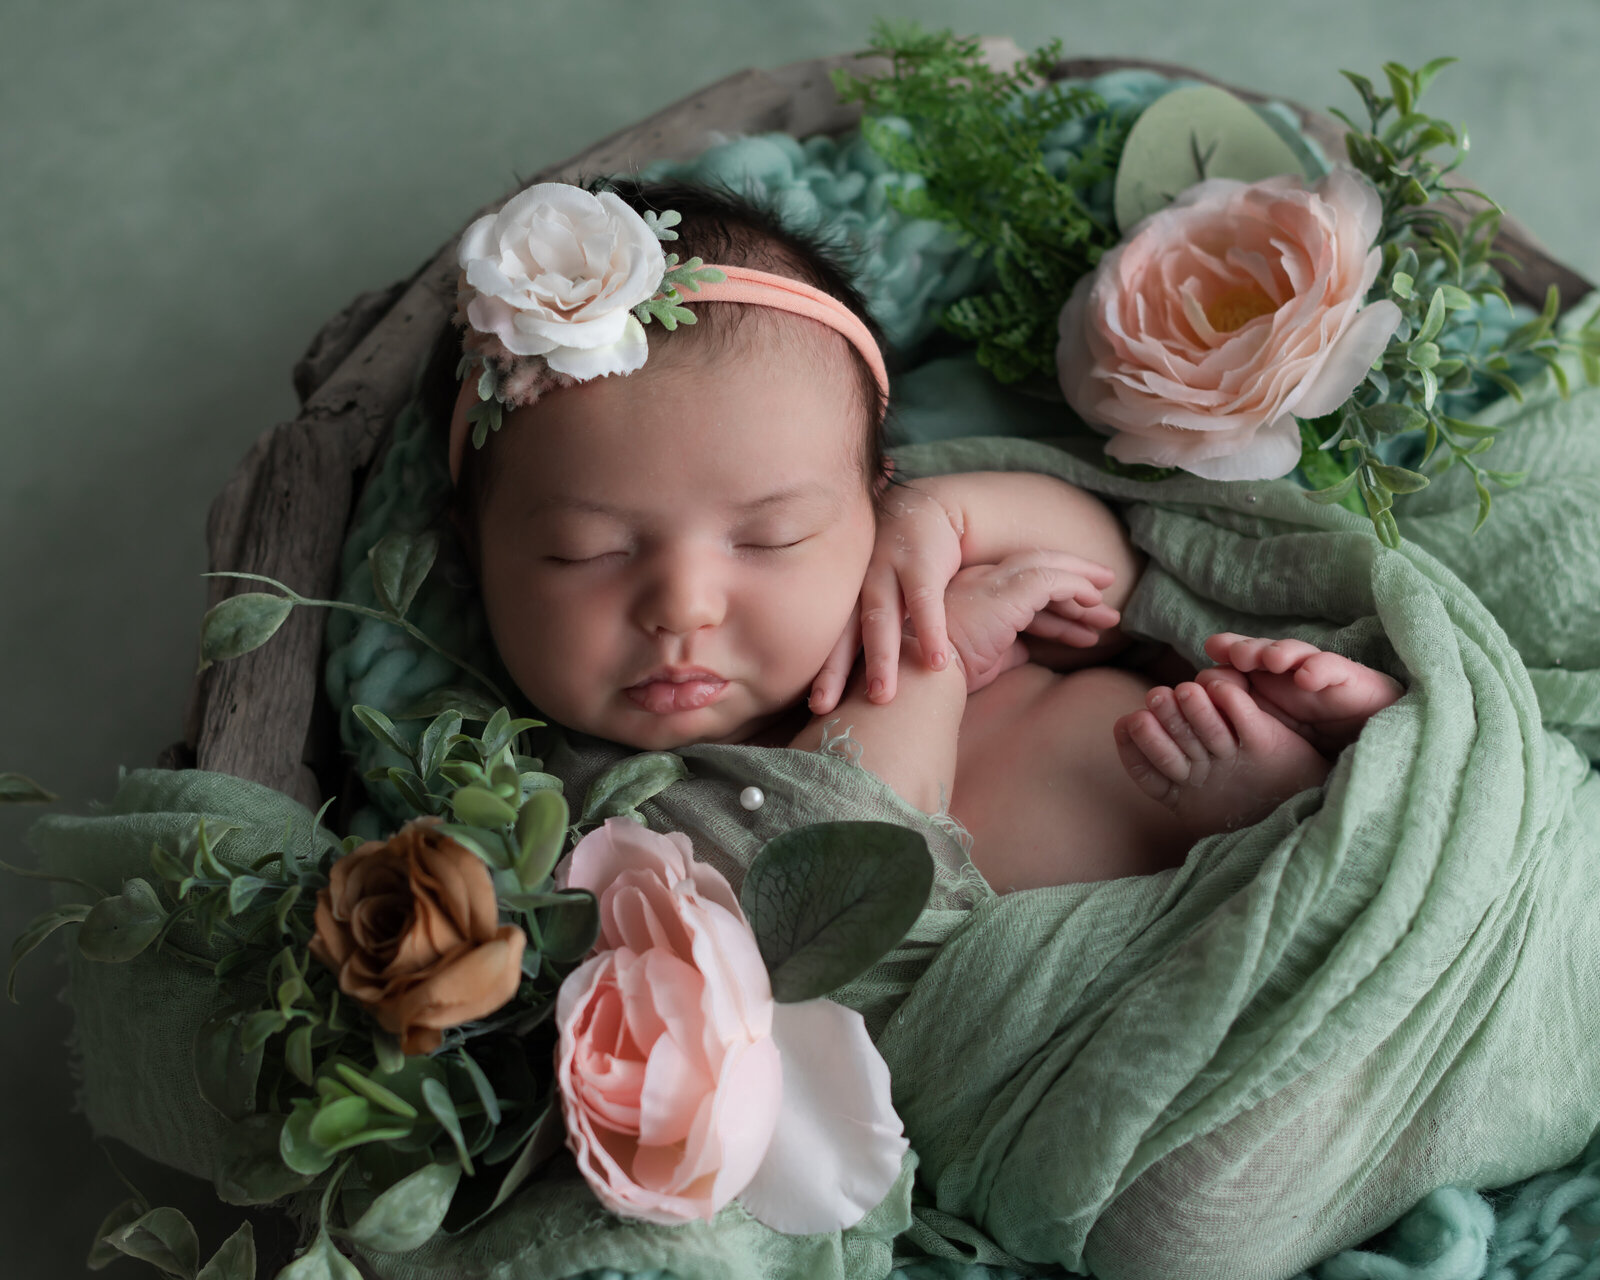 Baby photographer Acworth, Marietta, Atlanta, Alpharetta GA